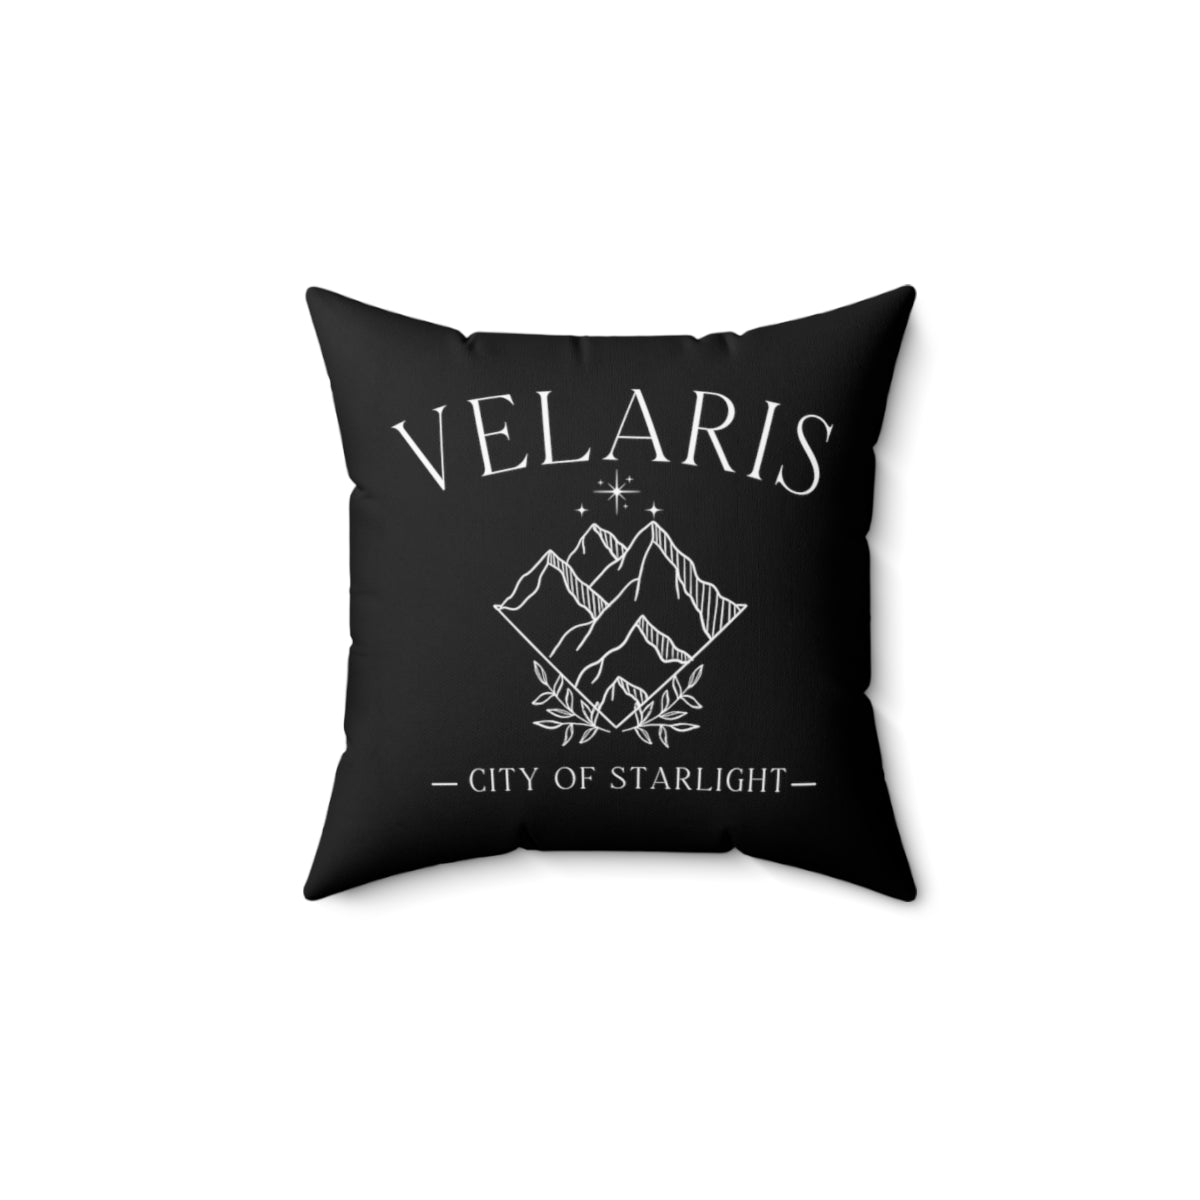 Velaris Pillow Case